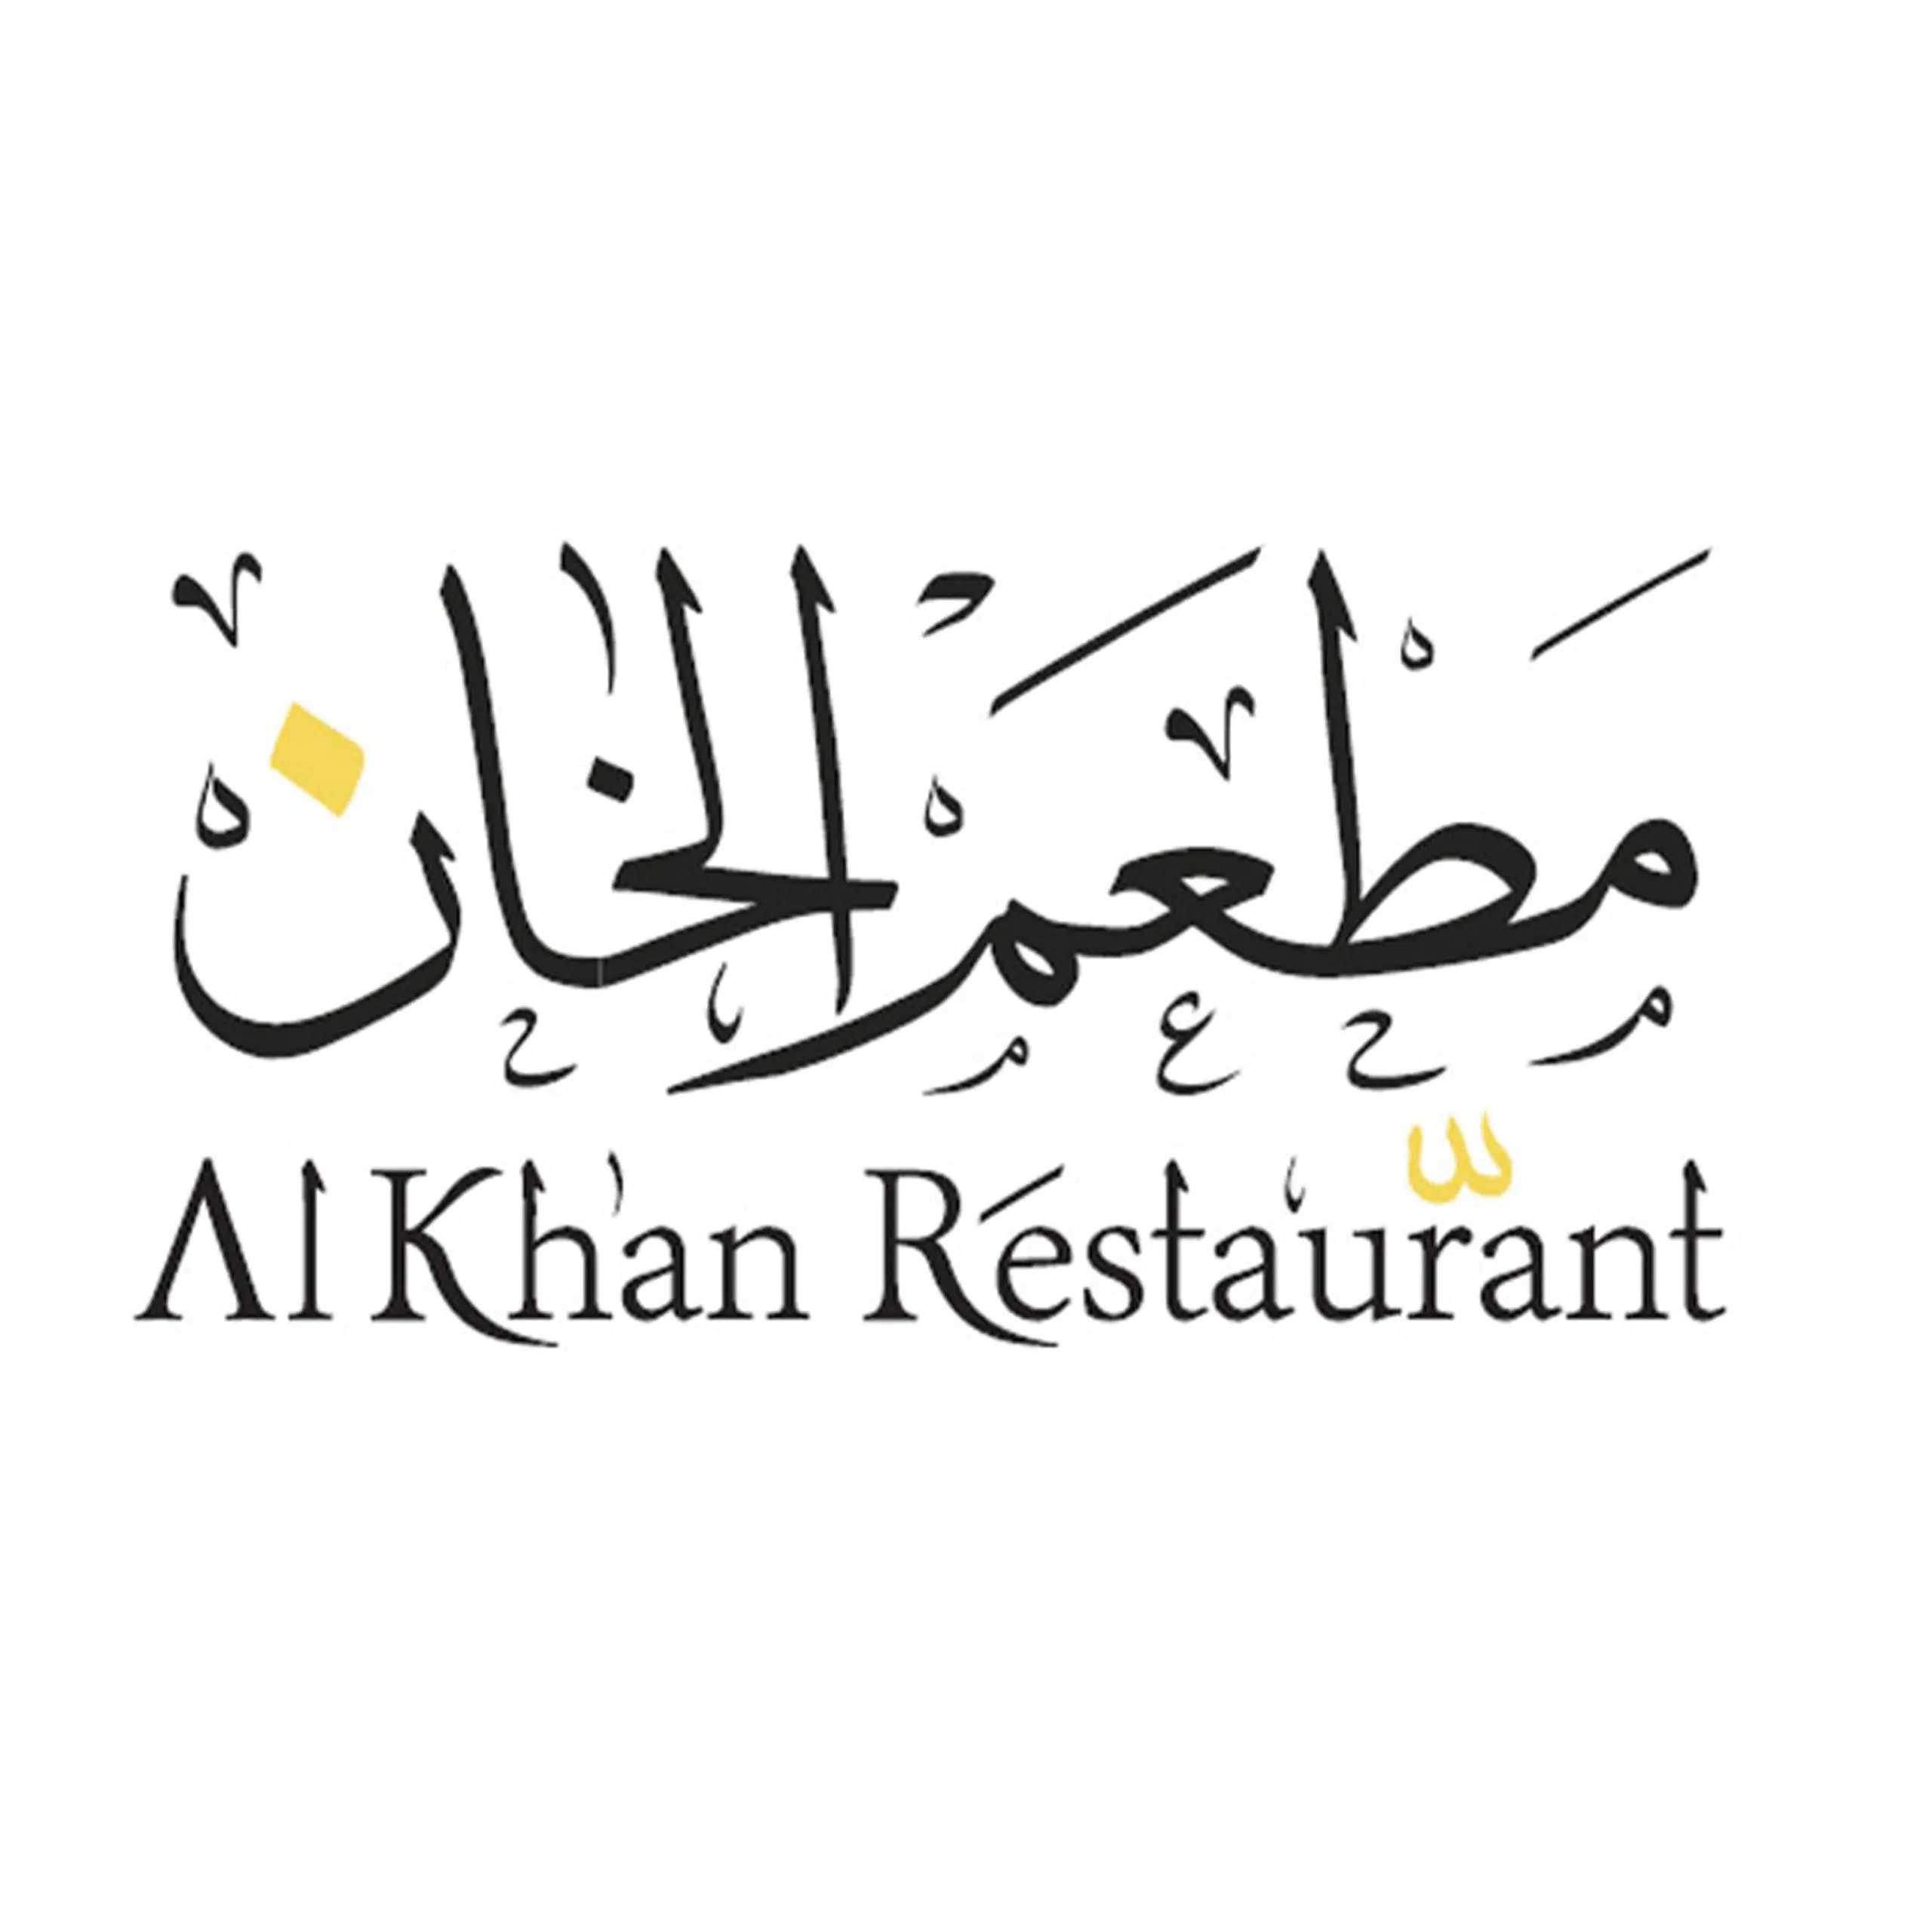 Al Khan in Al Khan